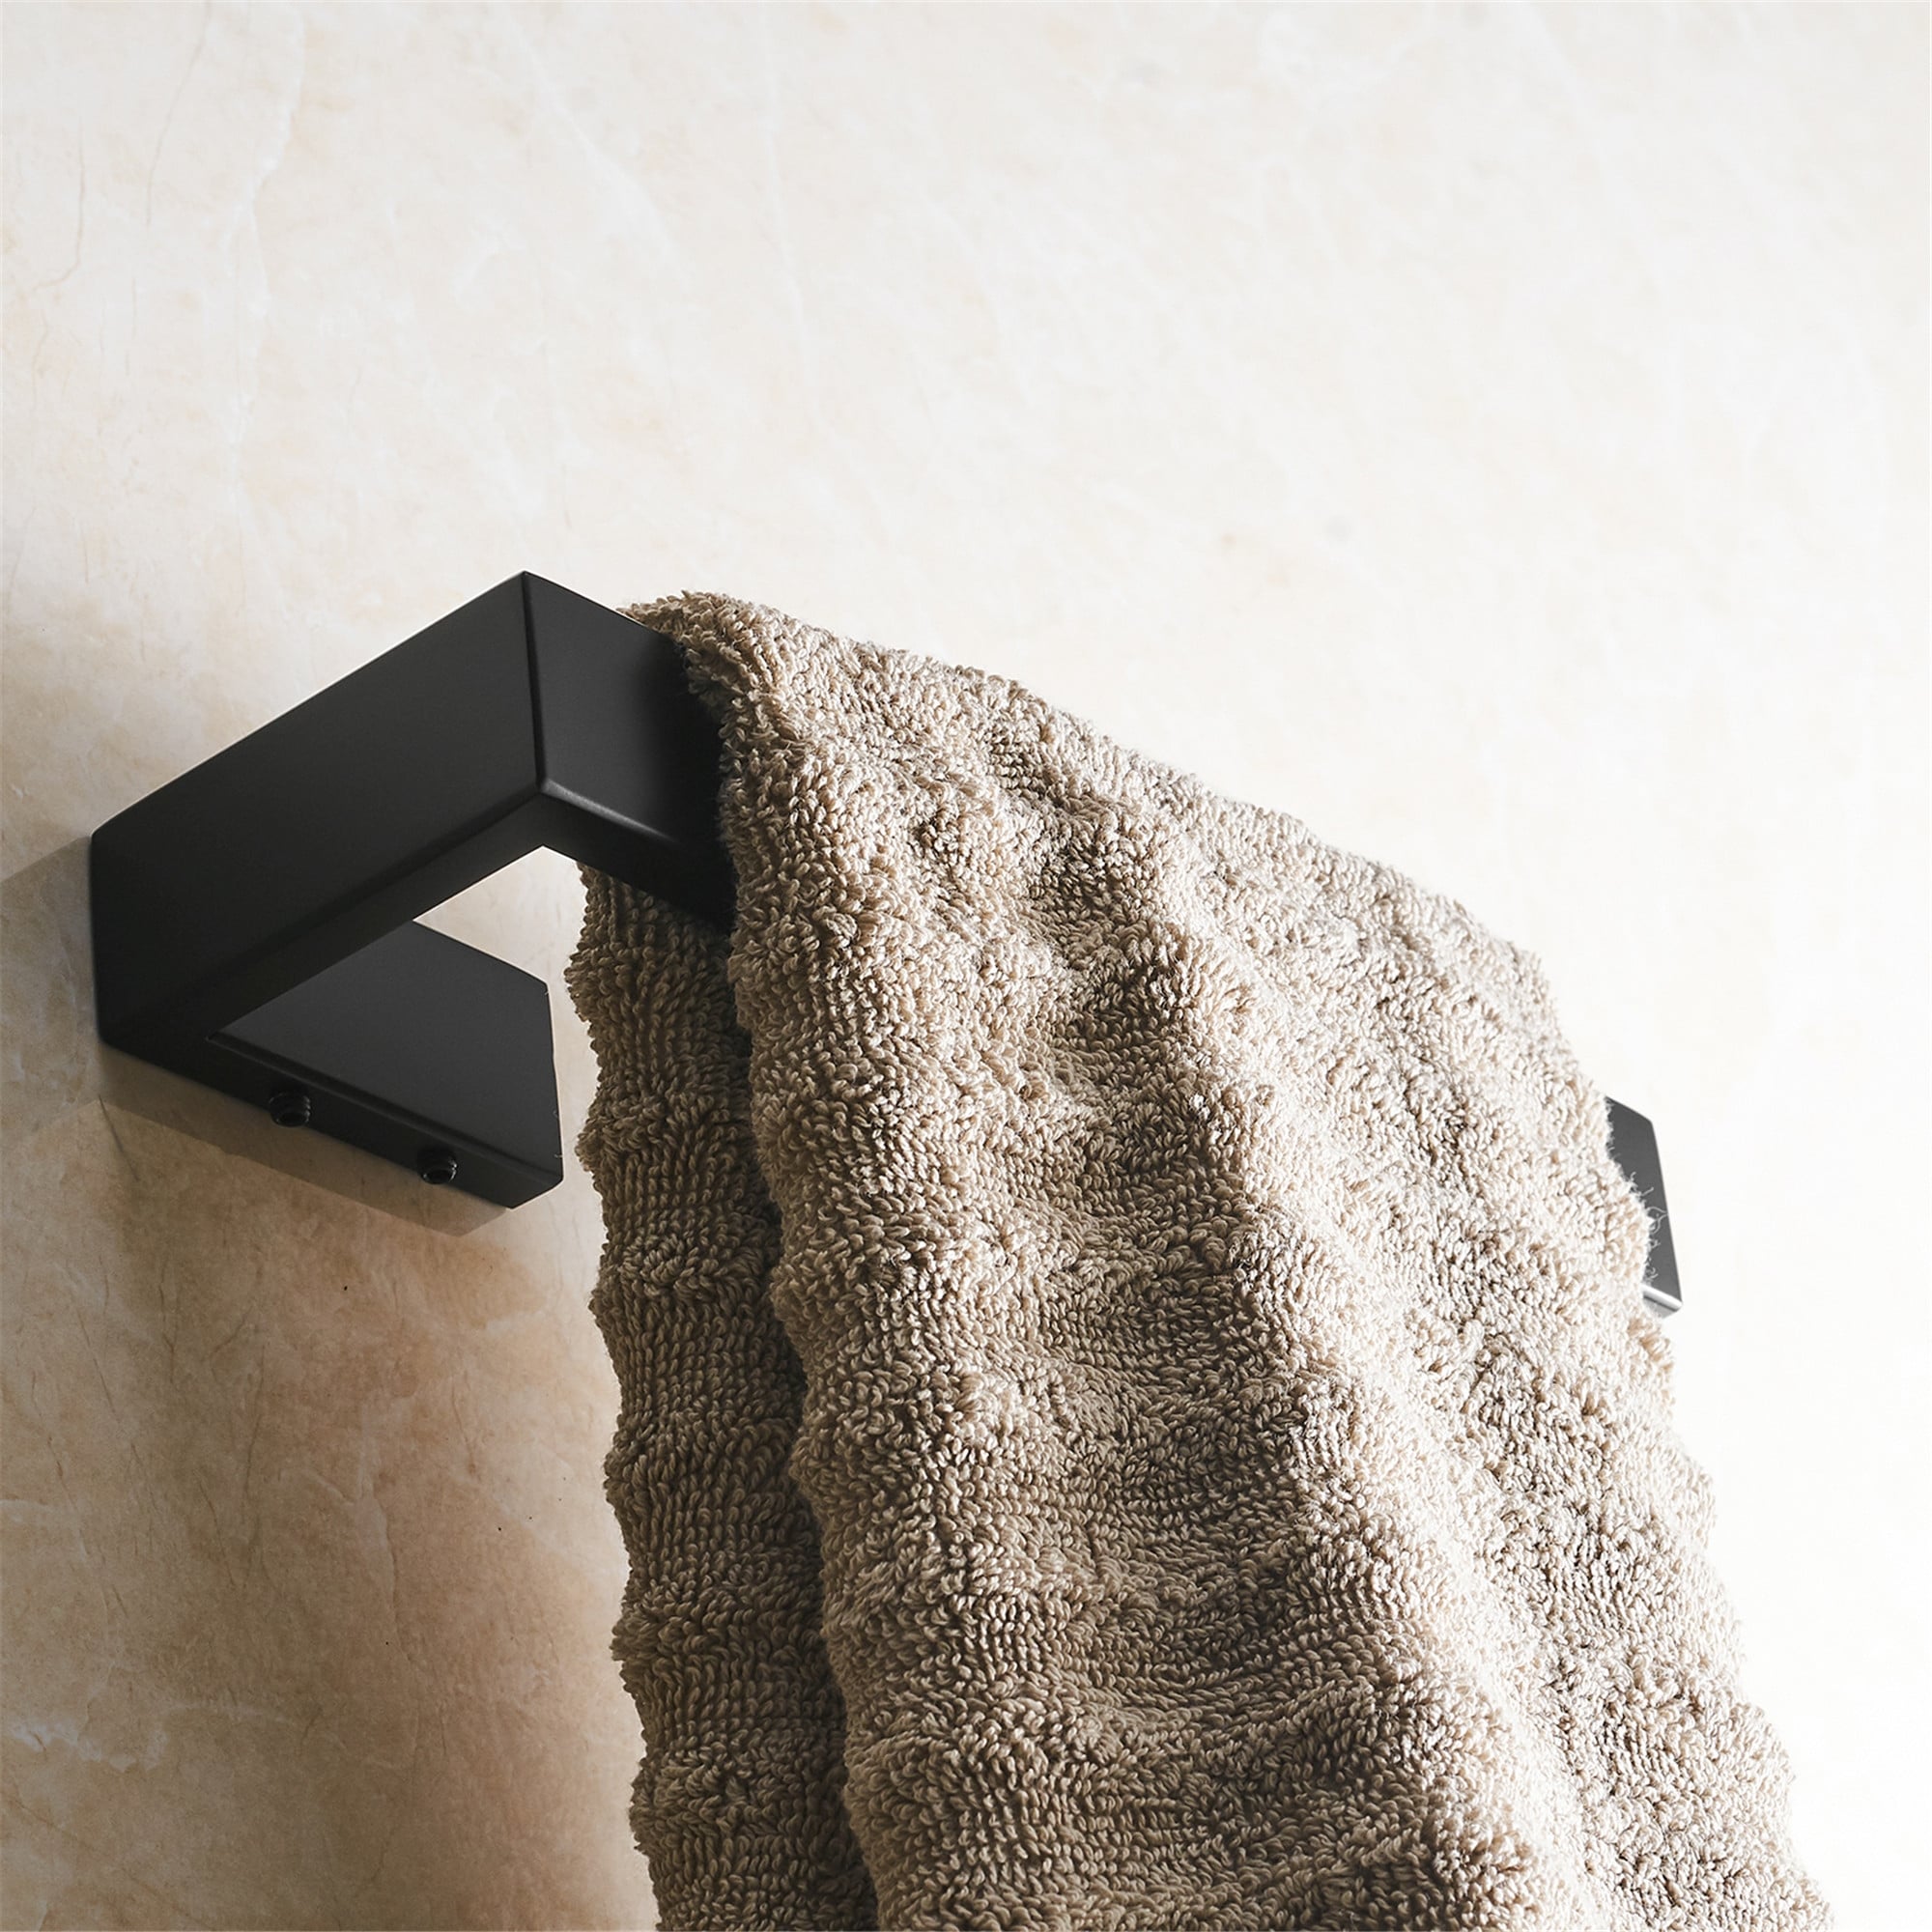 304 Stainless Steel Paper Towel Rack Hidden Installation - Bed Bath &  Beyond - 34424921